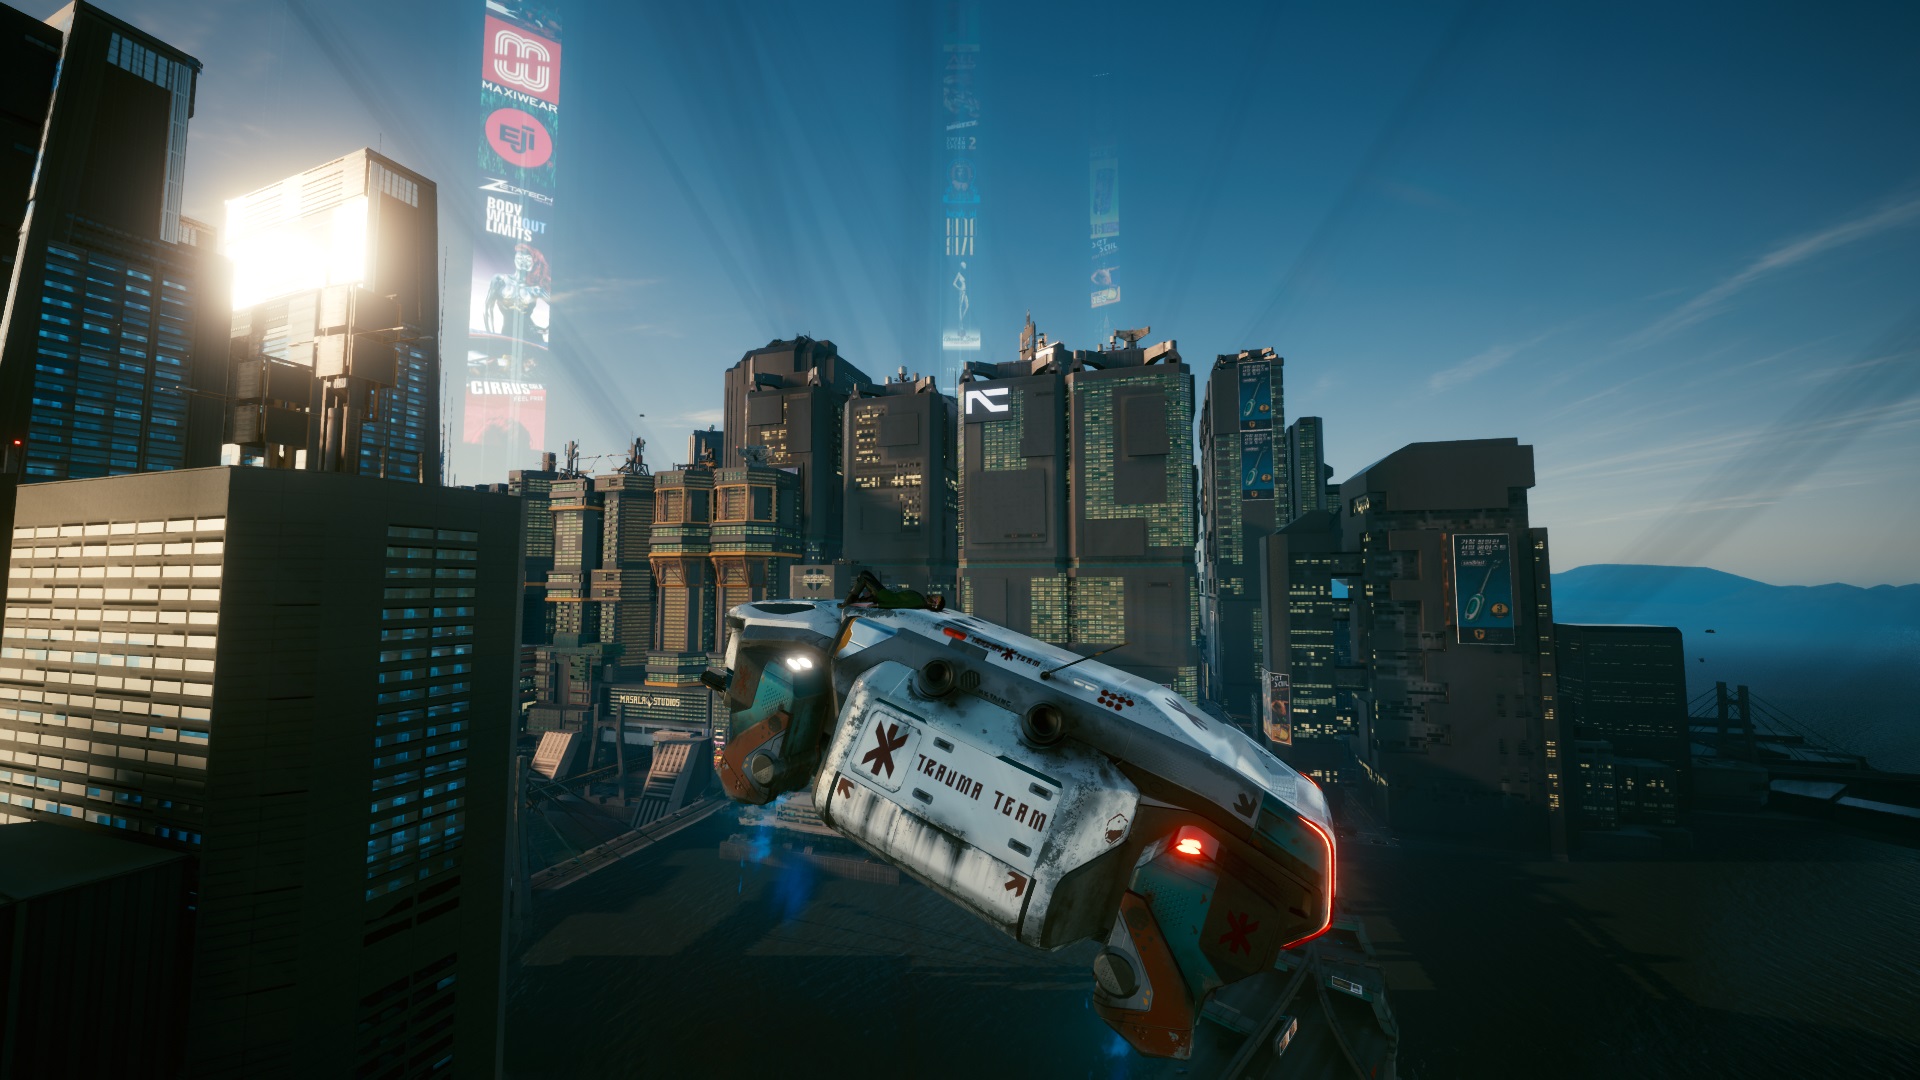 Cyber City Cyberpunk 2077 Video Games Science Fiction PC Gaming Futuristic City 1920x1080